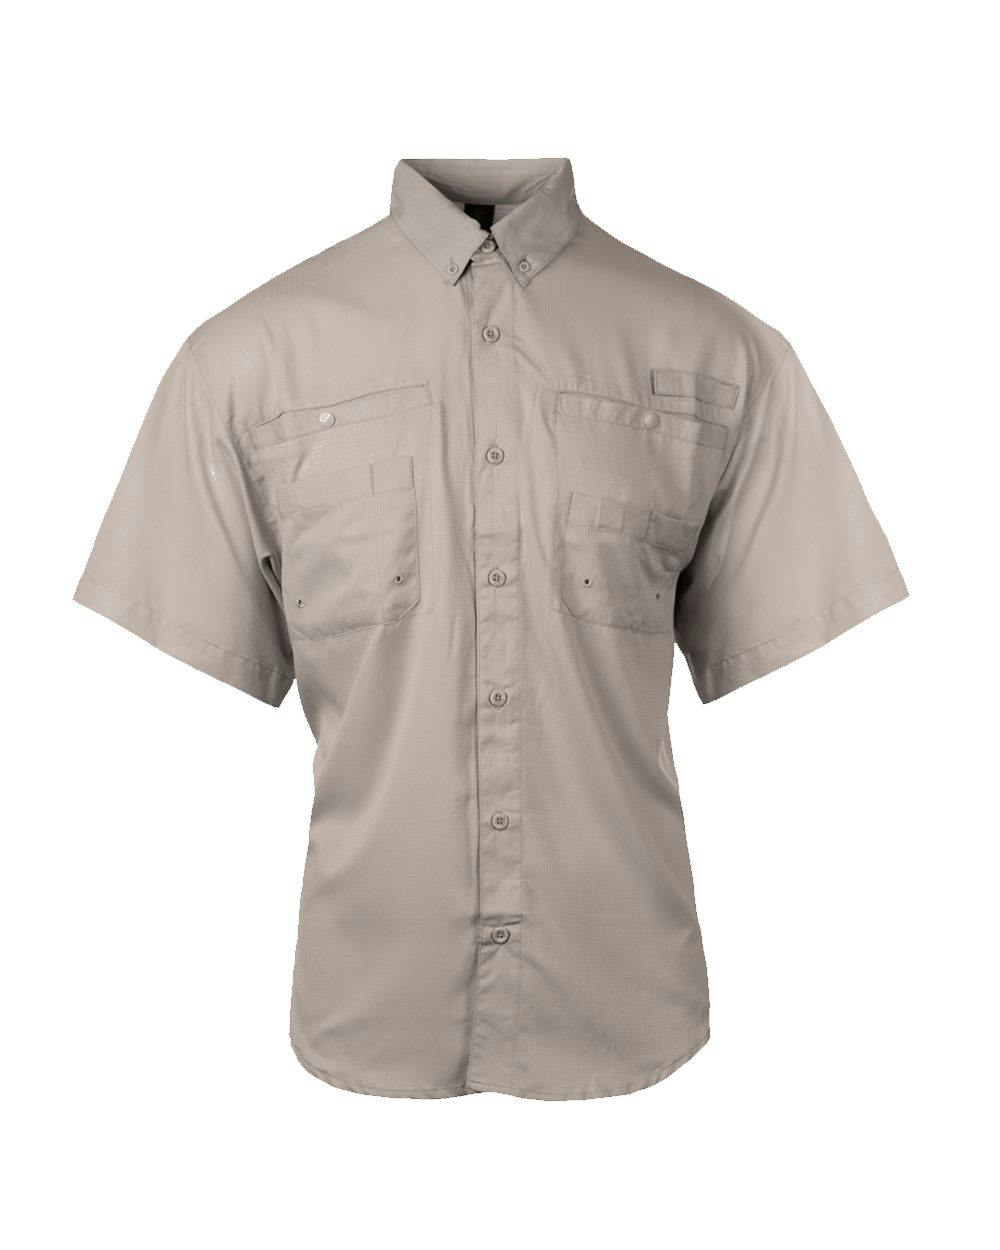 Image for Baja Short Sleeve Fishing Shirt - 2297